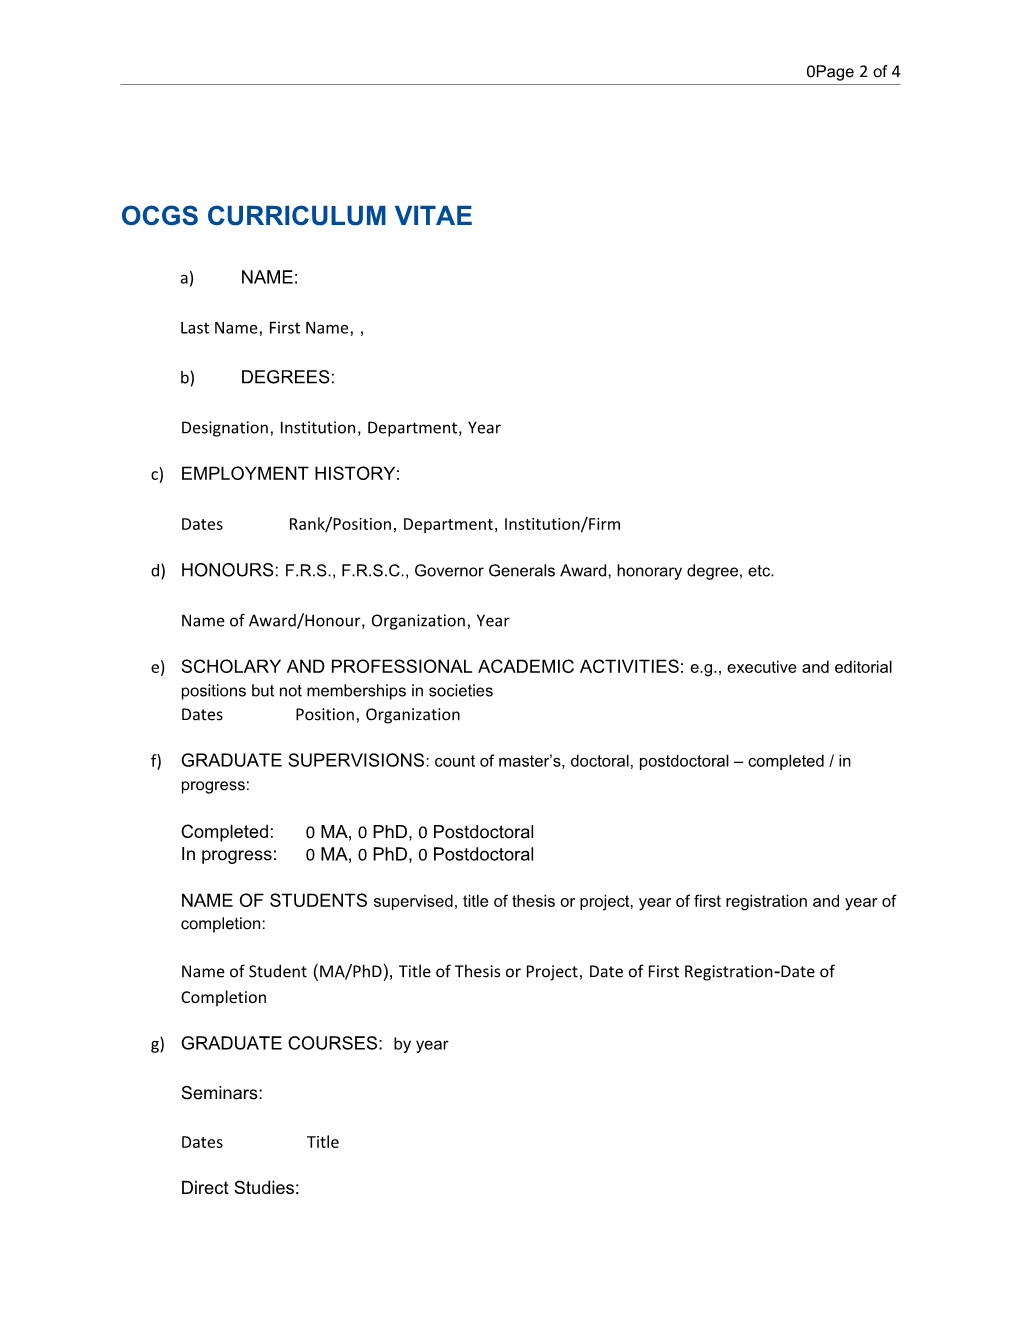 Ryerson University OCGS Curriculum Vitae